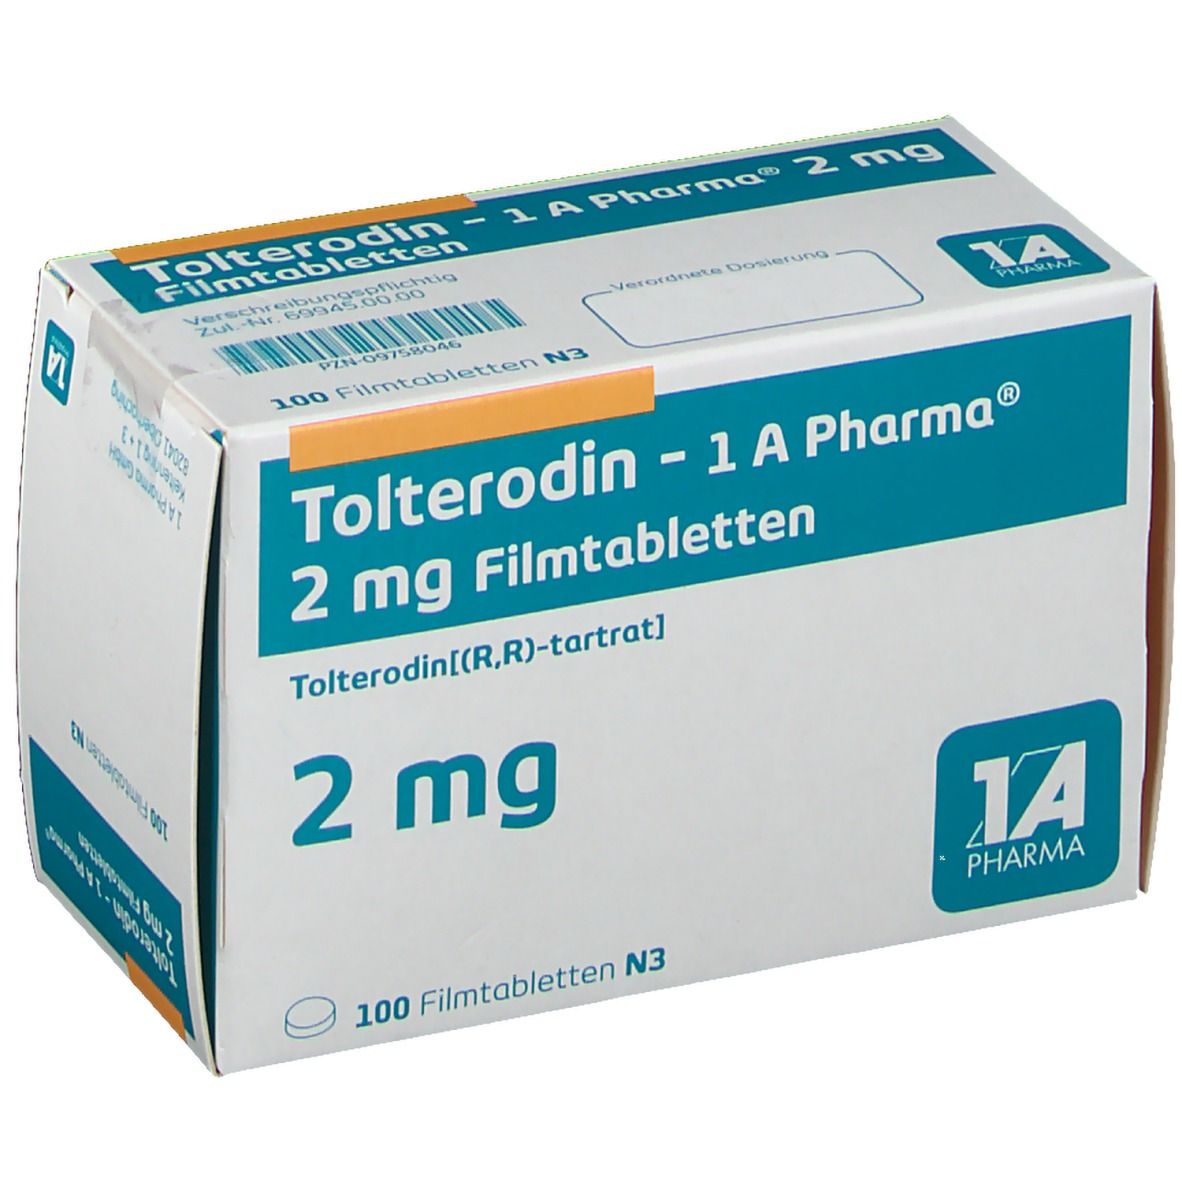 Tolterodin - 1 A Pharma® 2 mg